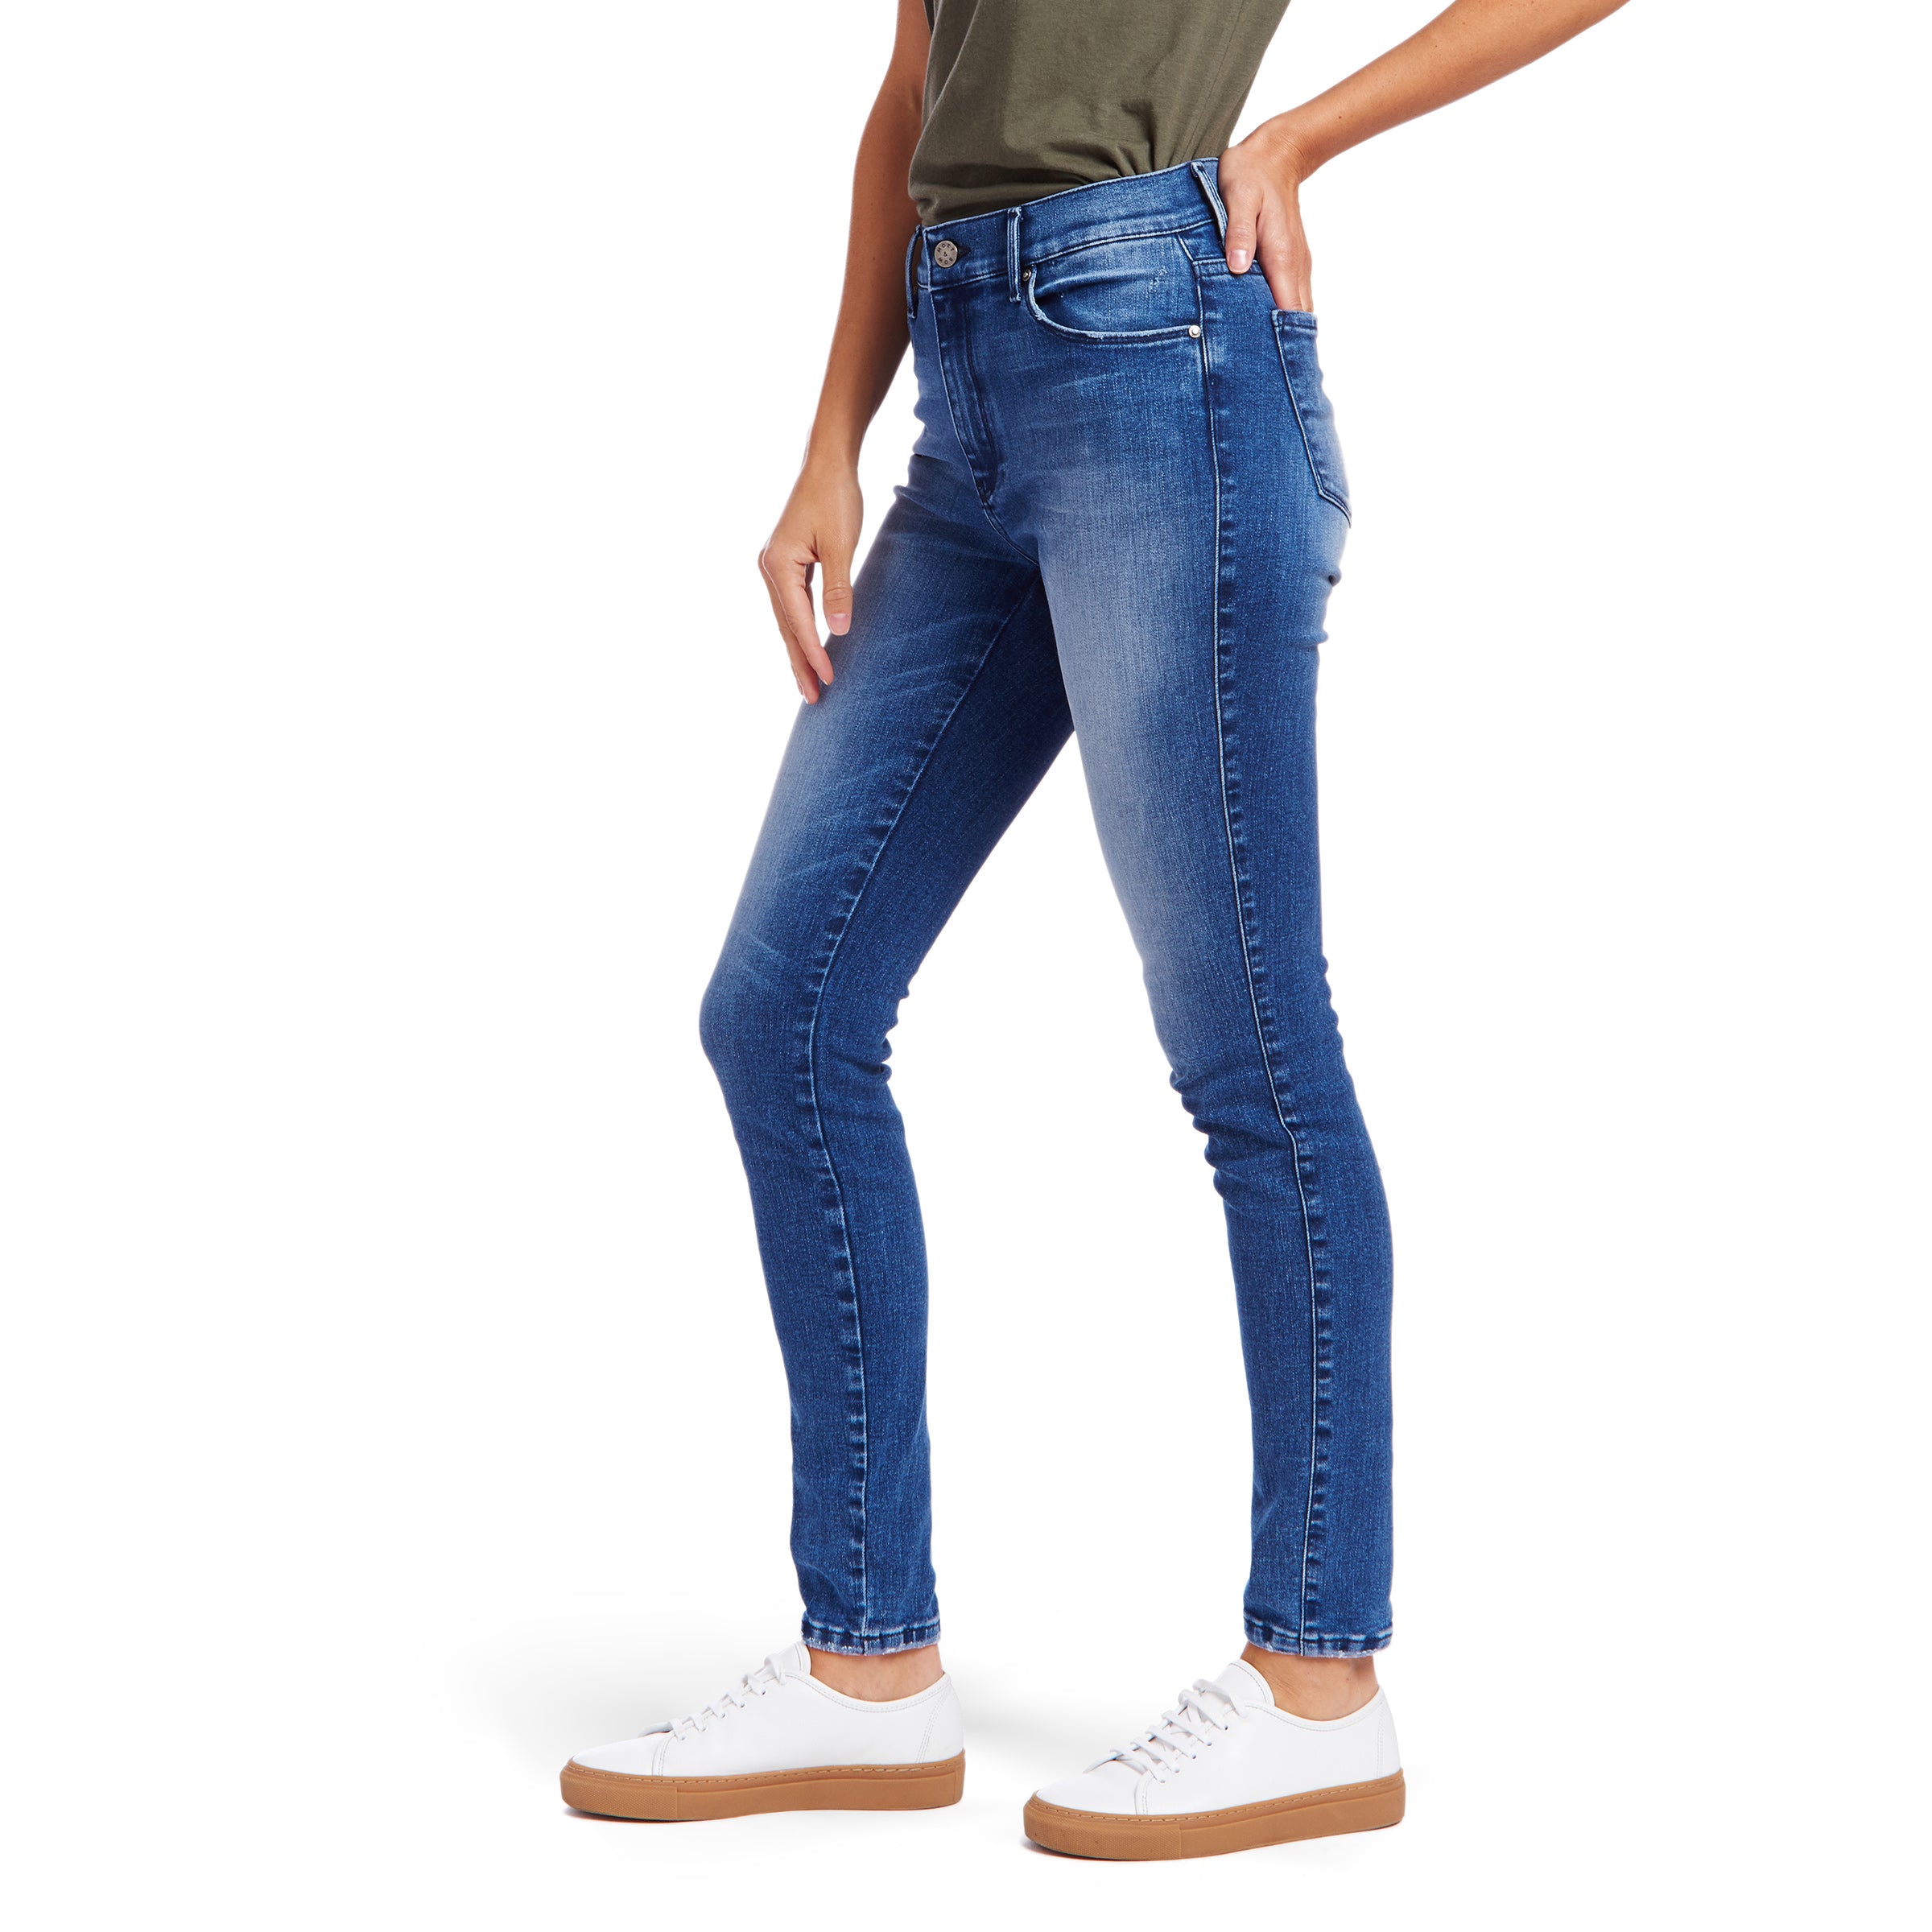 Women wearing Medium Blue High Rise Skinny Moore Jeans